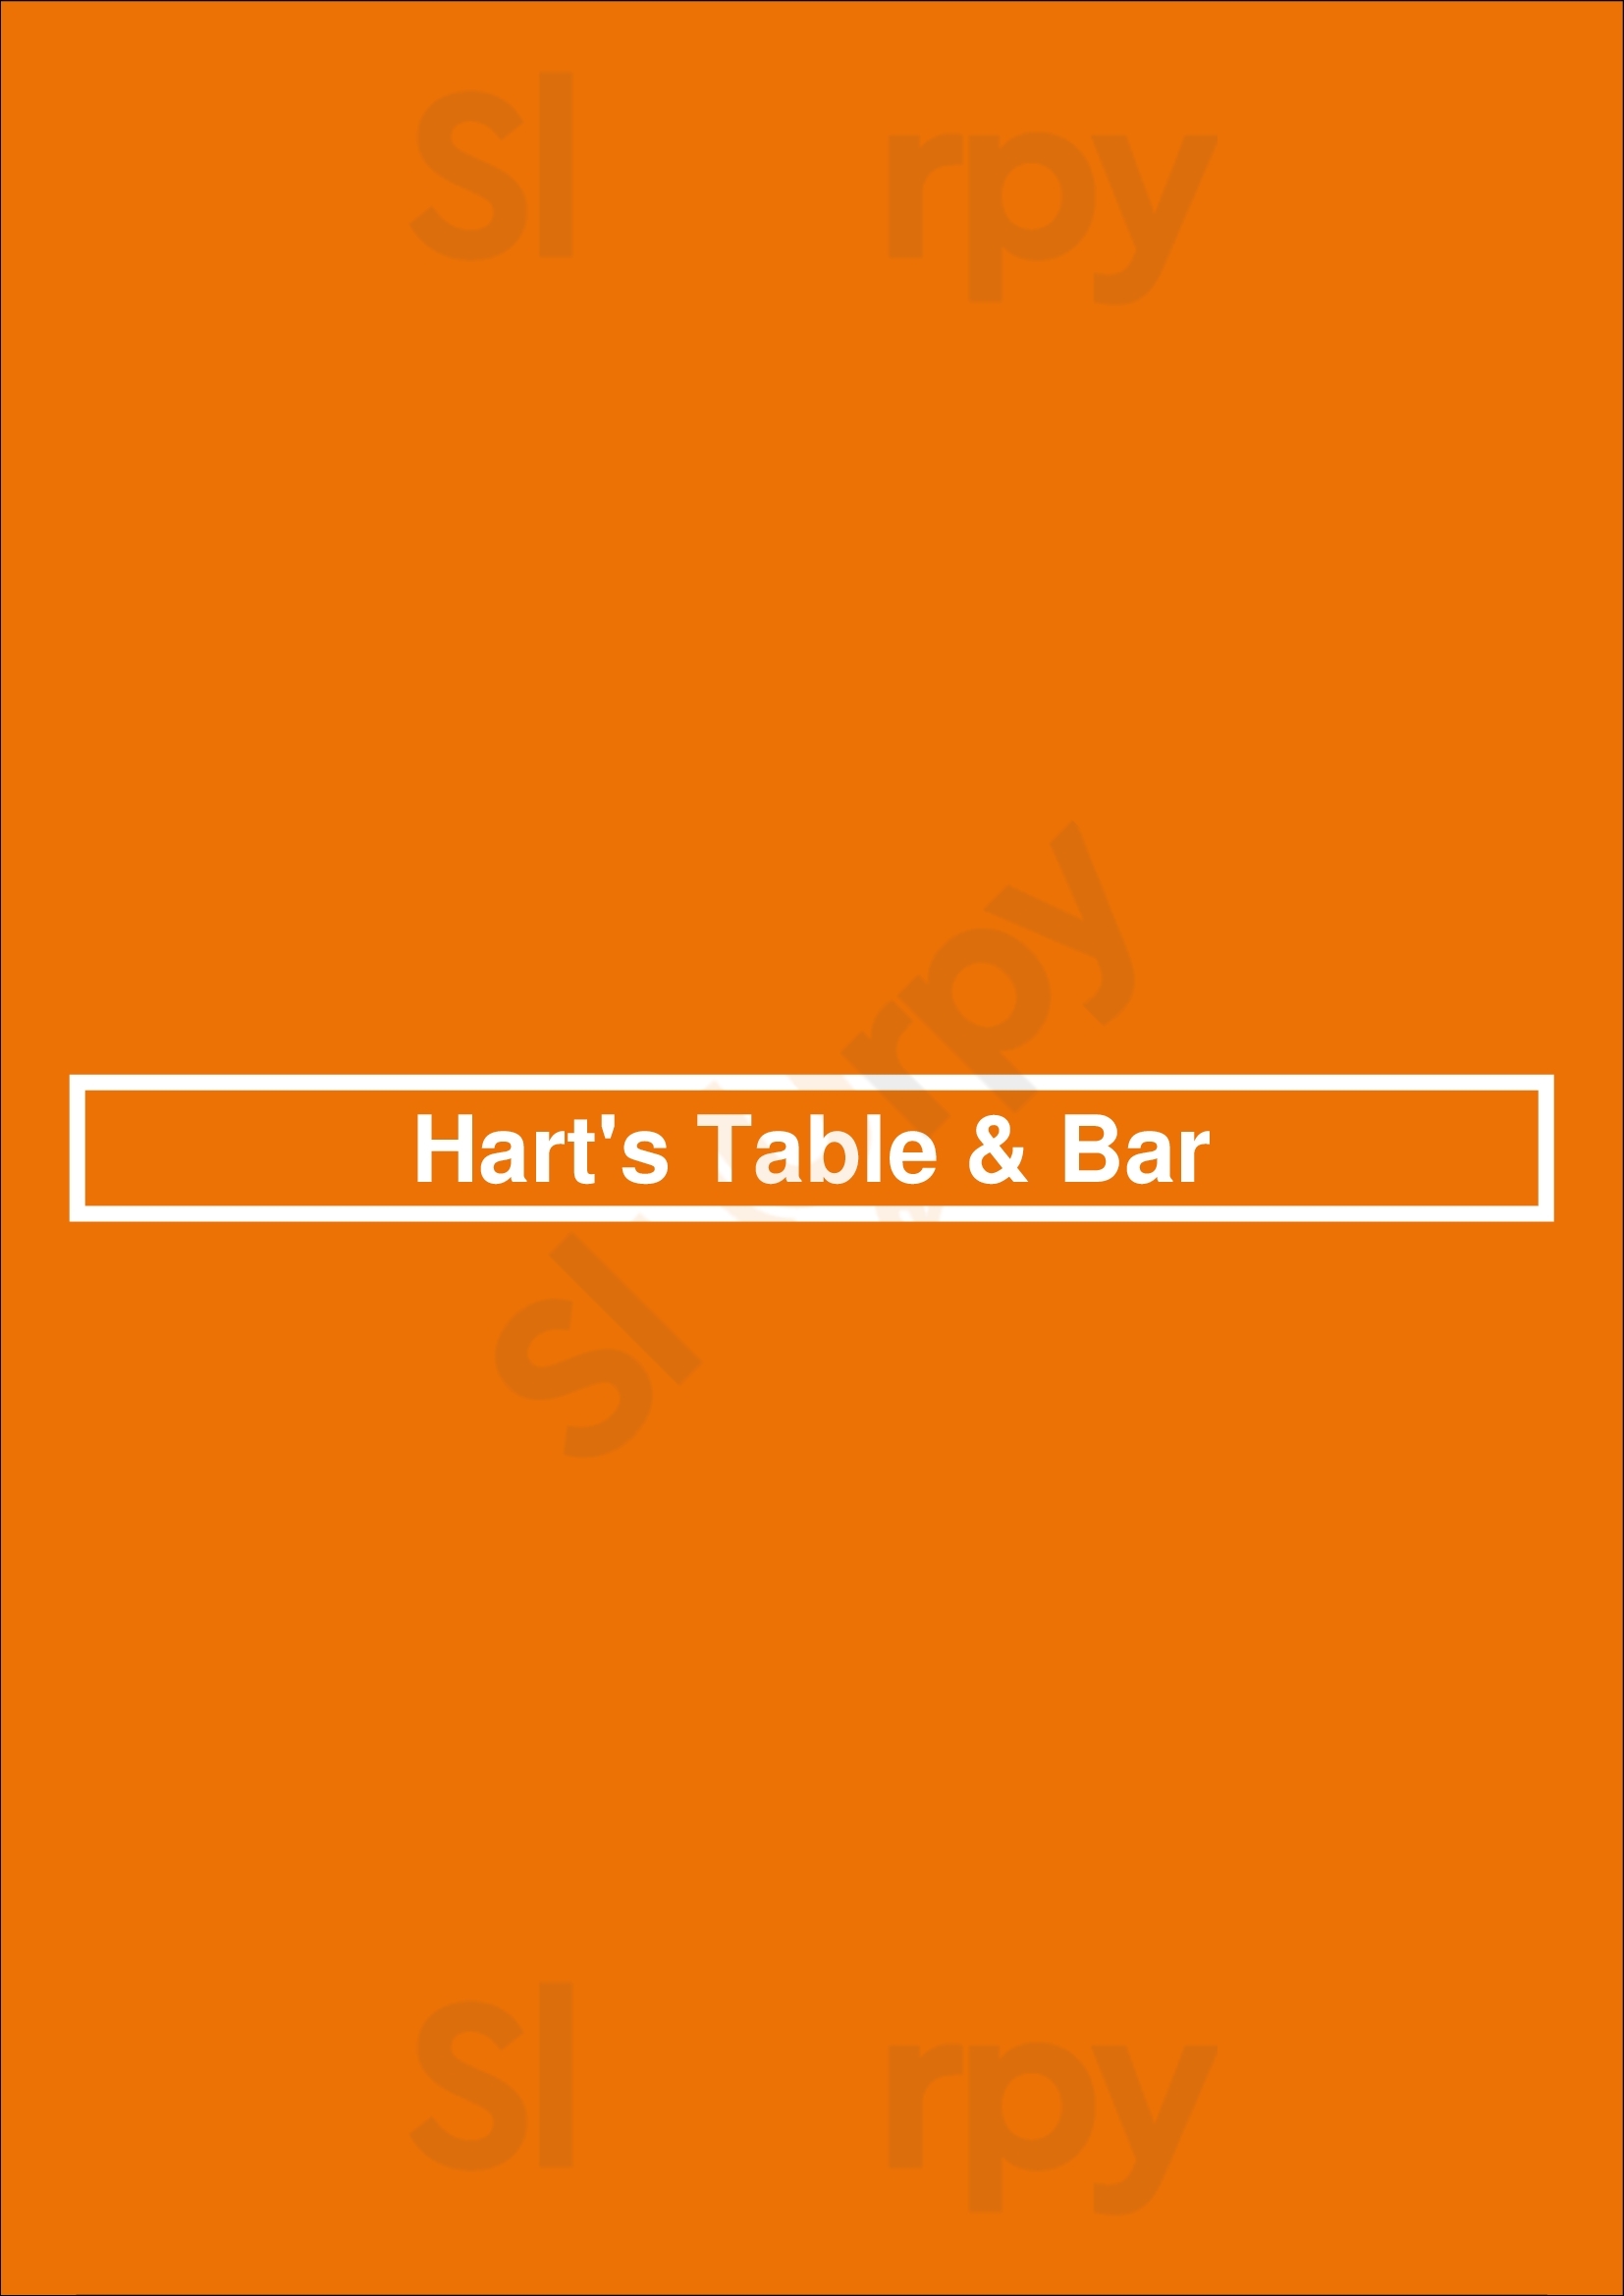 Hart's Table & Bar Edmonton Menu - 1